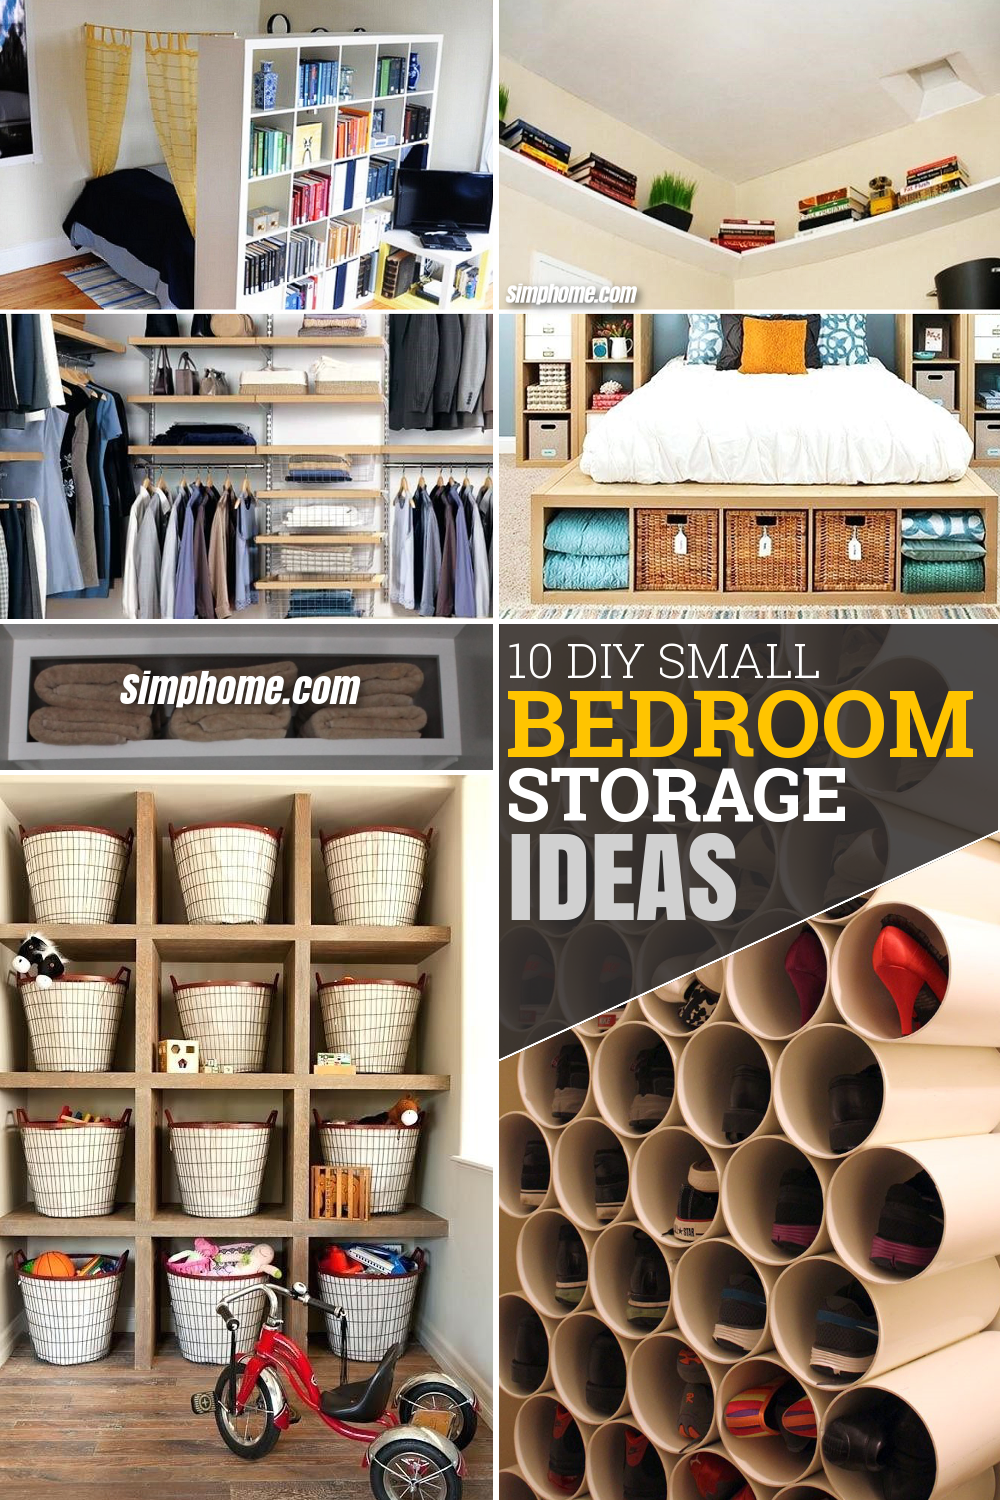 10 DIY Small Bedroom Storage Ideas via Simphome.com Pinterest Featured image